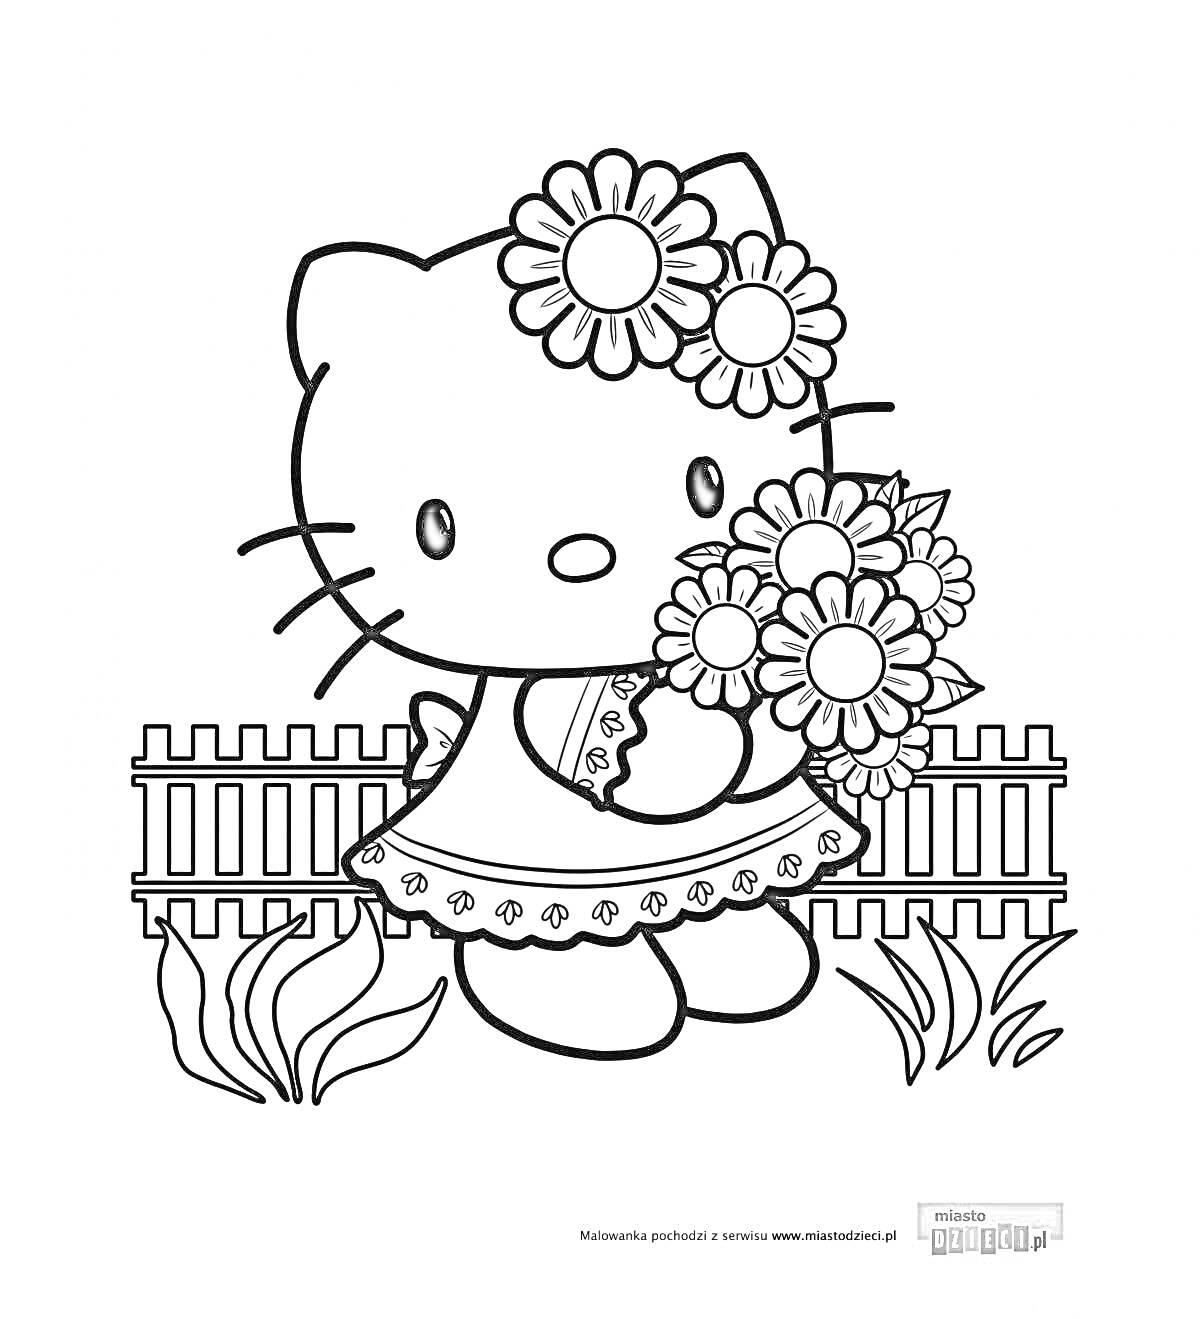 Раскраска Hello Kitty с букетом цветов на фоне забора и растений